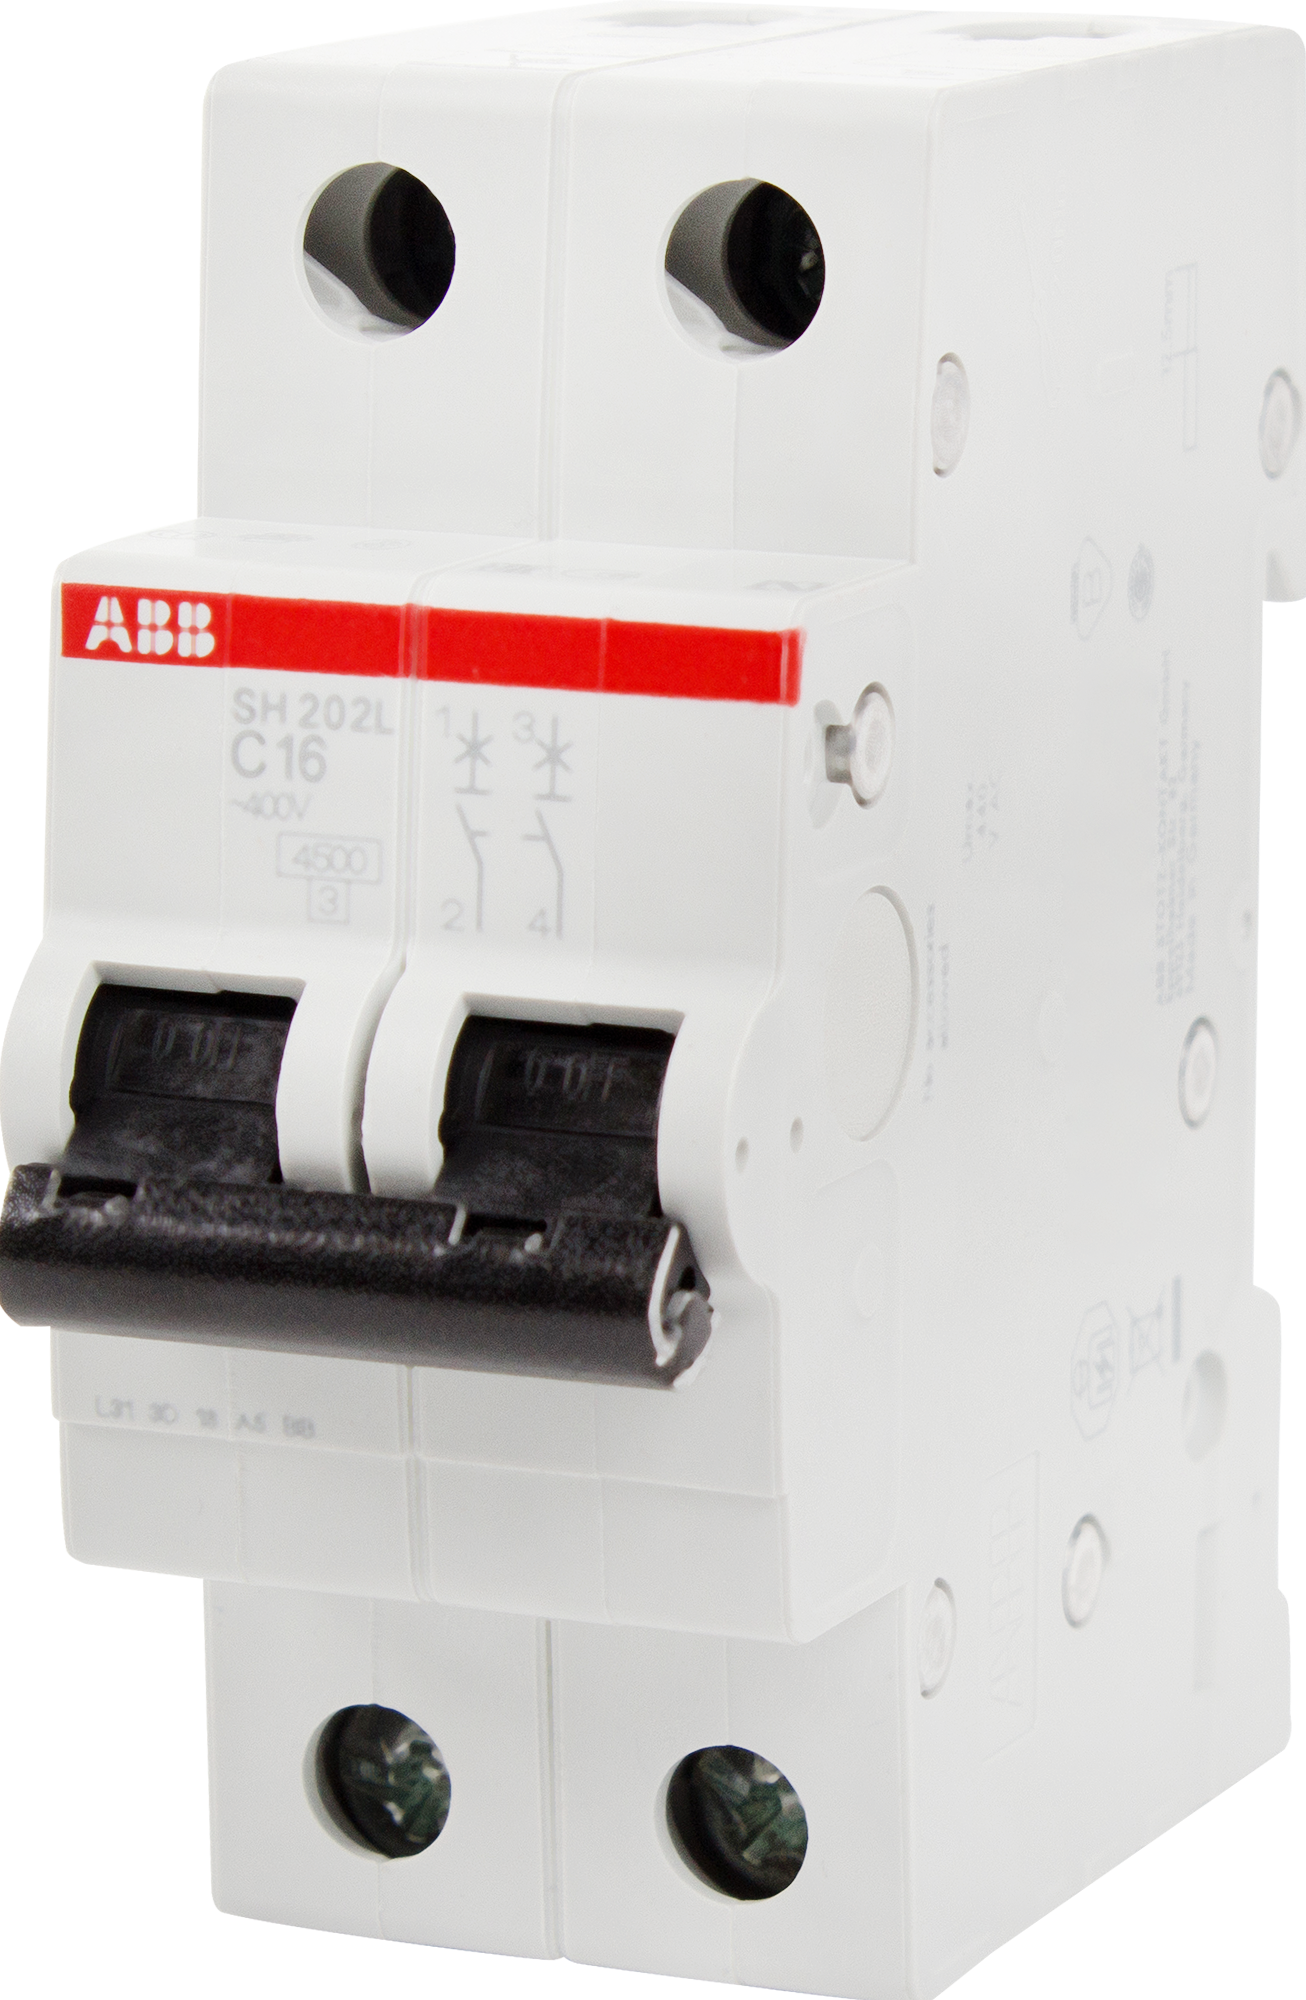 C40 автоматический выключатель. Автоматический выключатель ABB s202. Автоматический модульный выключатель ABB 2п c sh202l 4.5ка 50а. ABB sh202l c32. Автомат ABB sh202l 2p 10а.